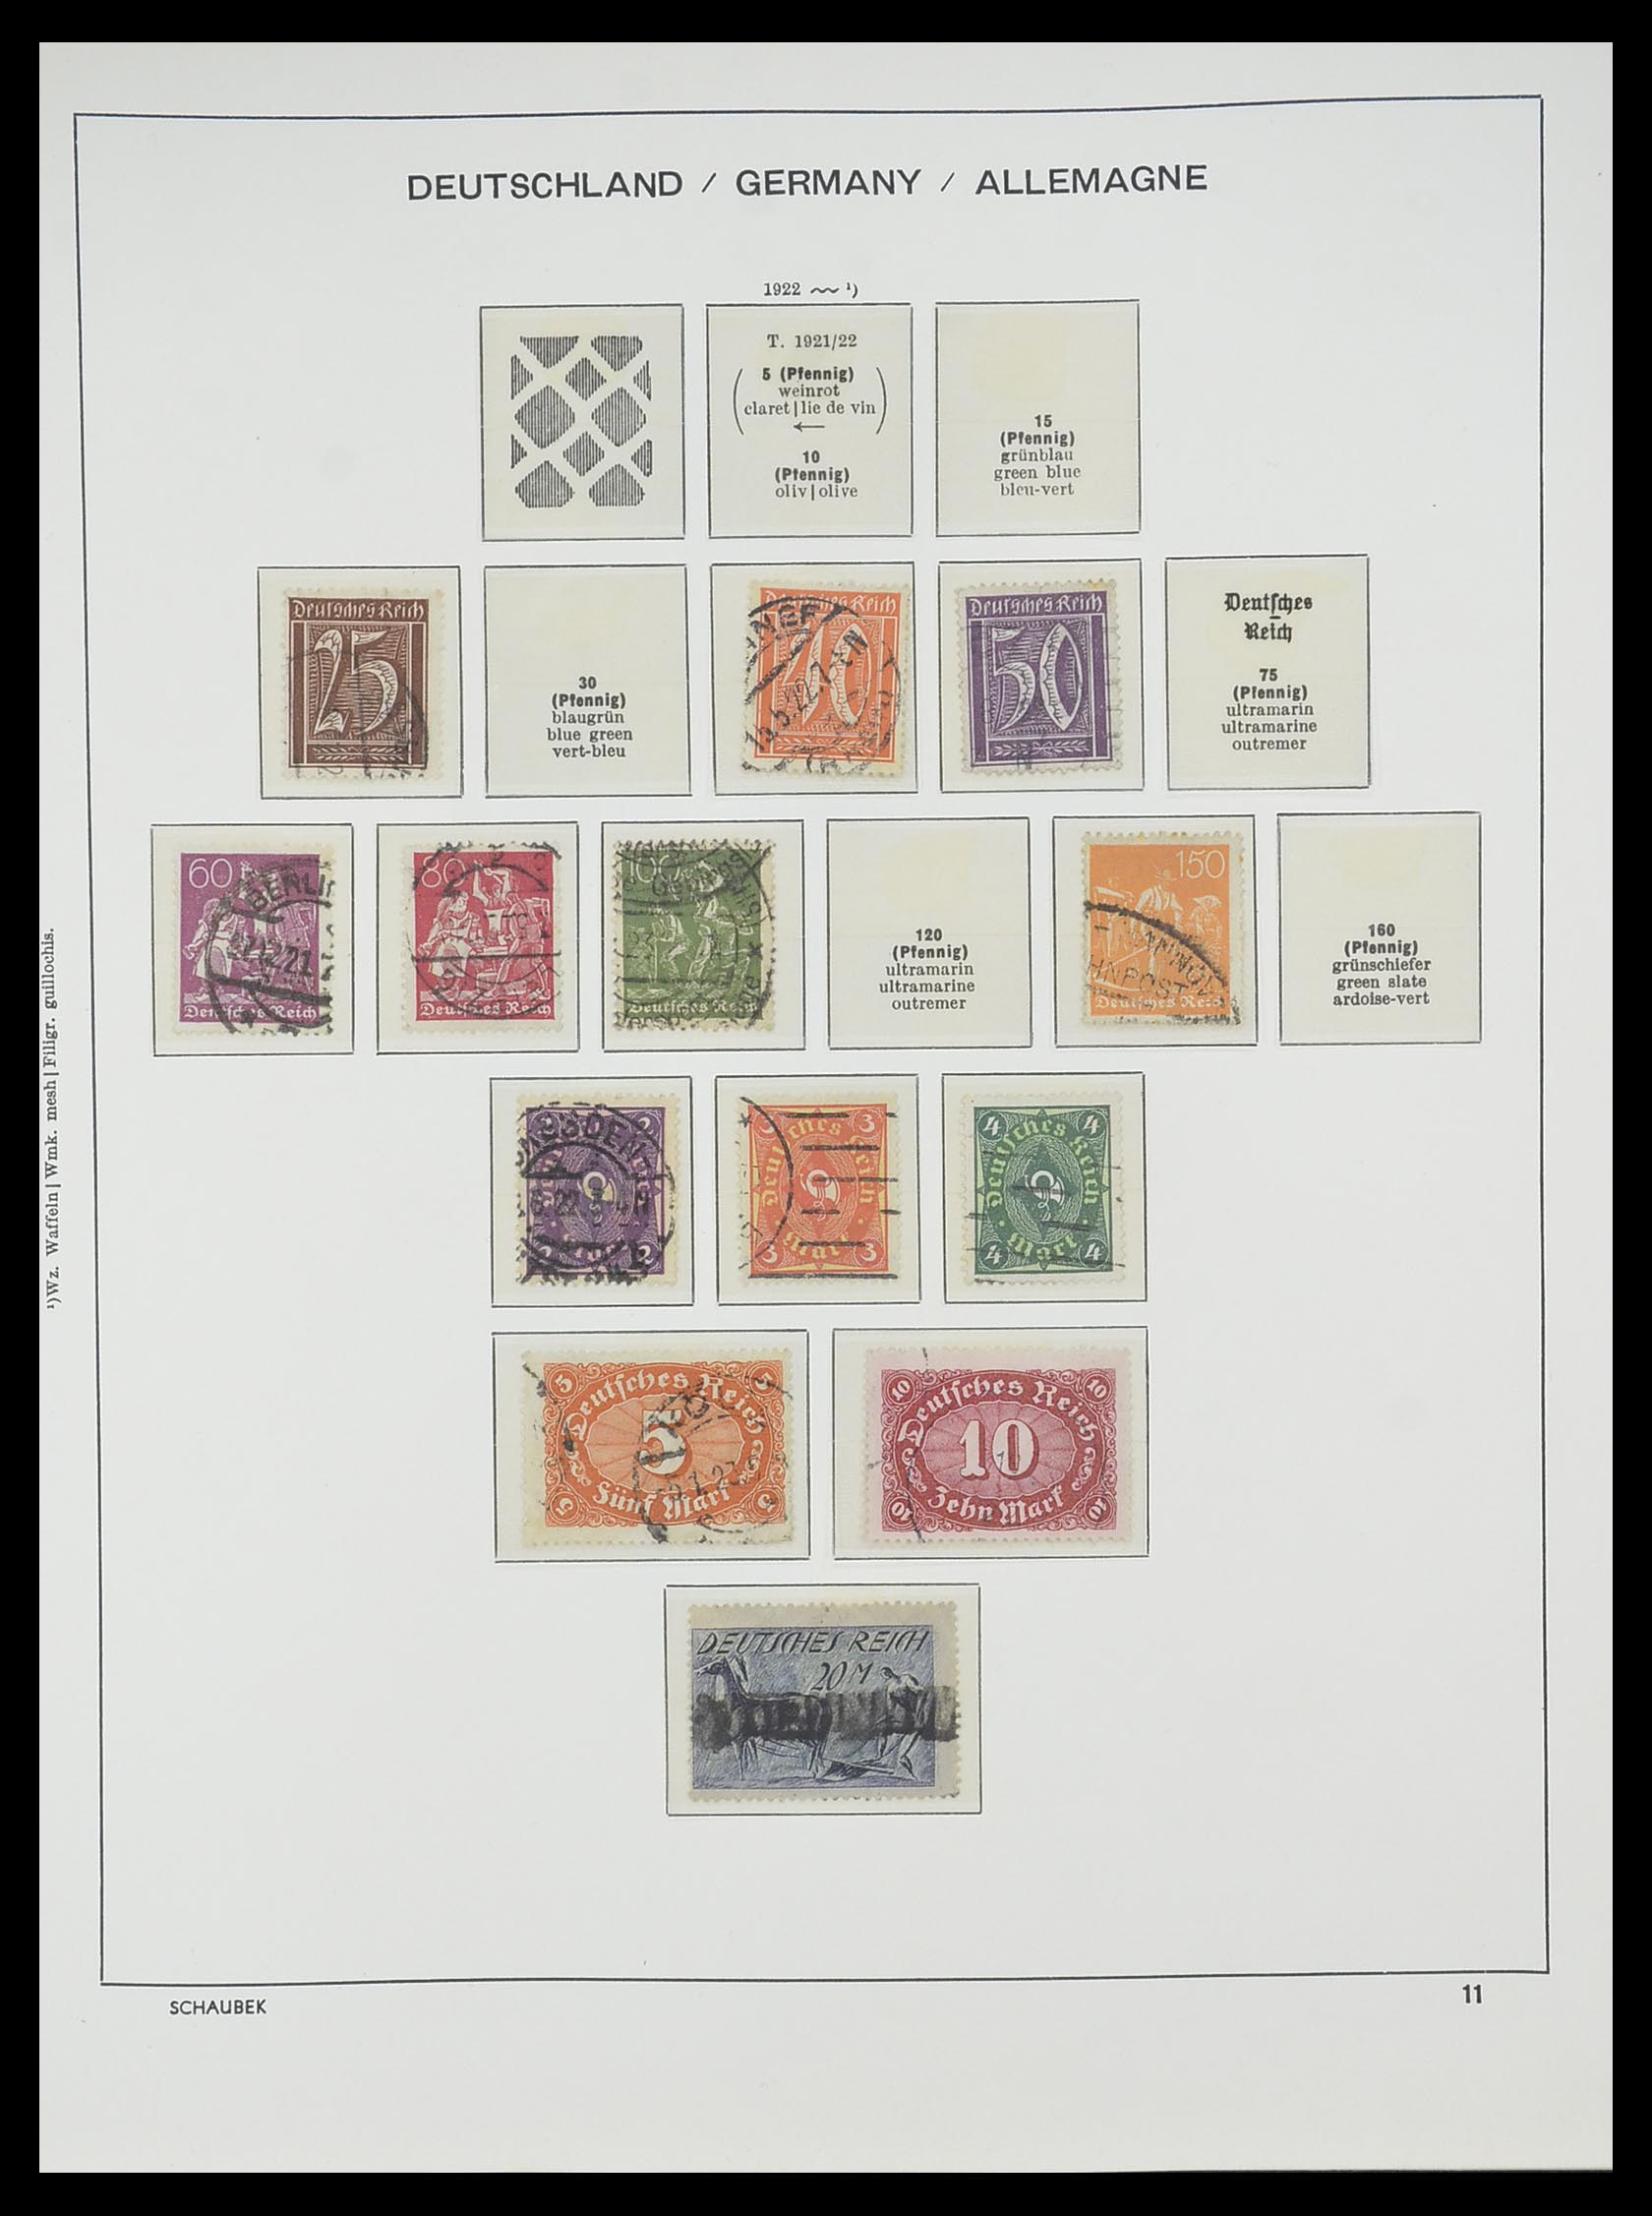 33697 011 - Stamp collection 33697 German Reich 1872-1945.